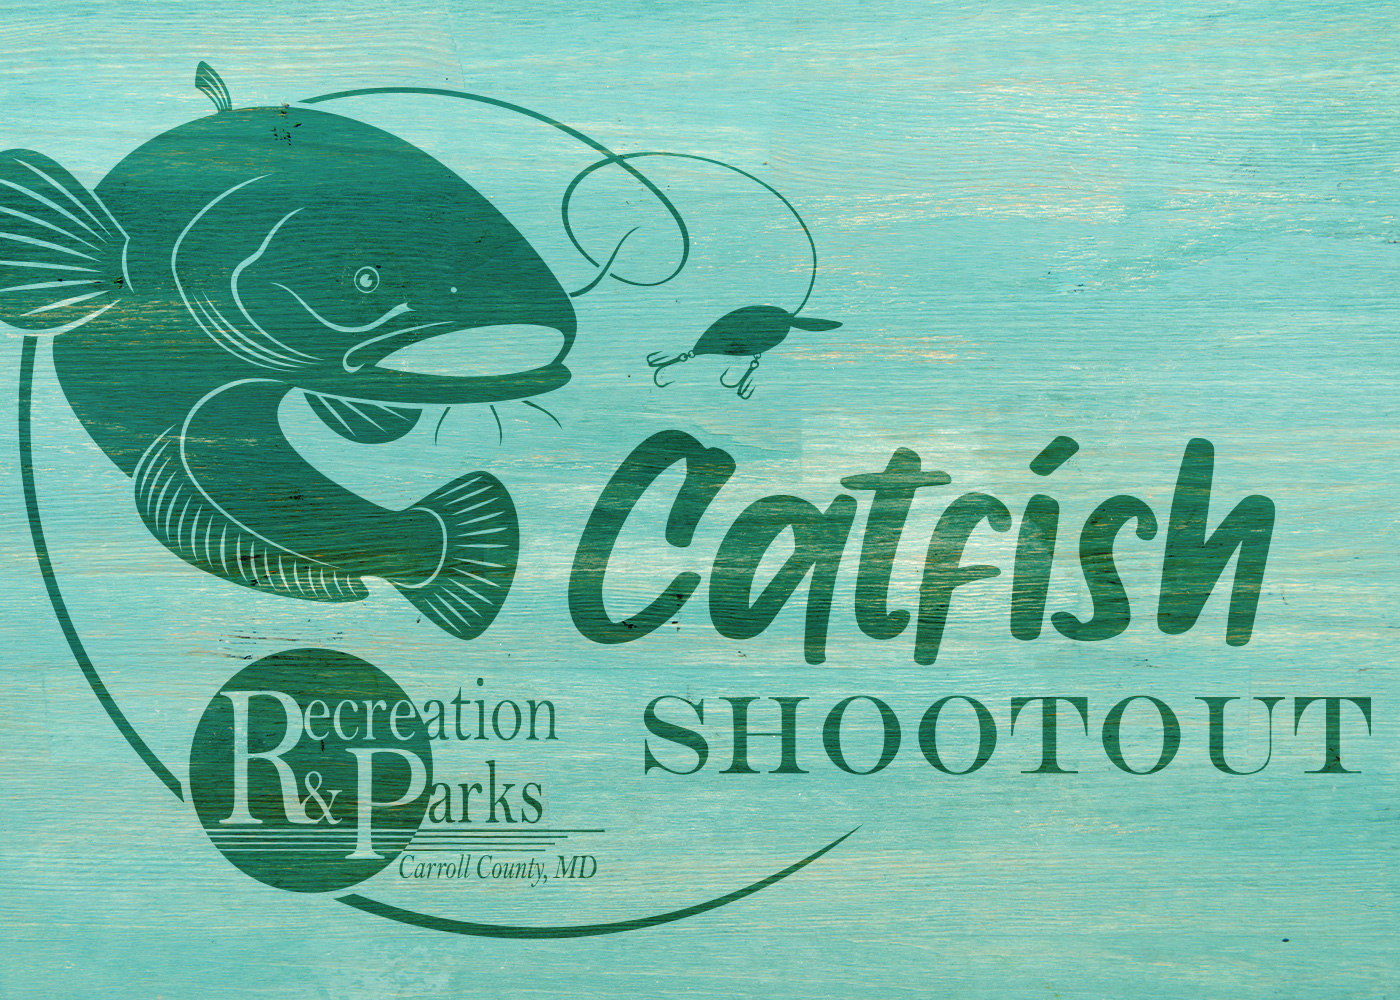 Catfish Shootout